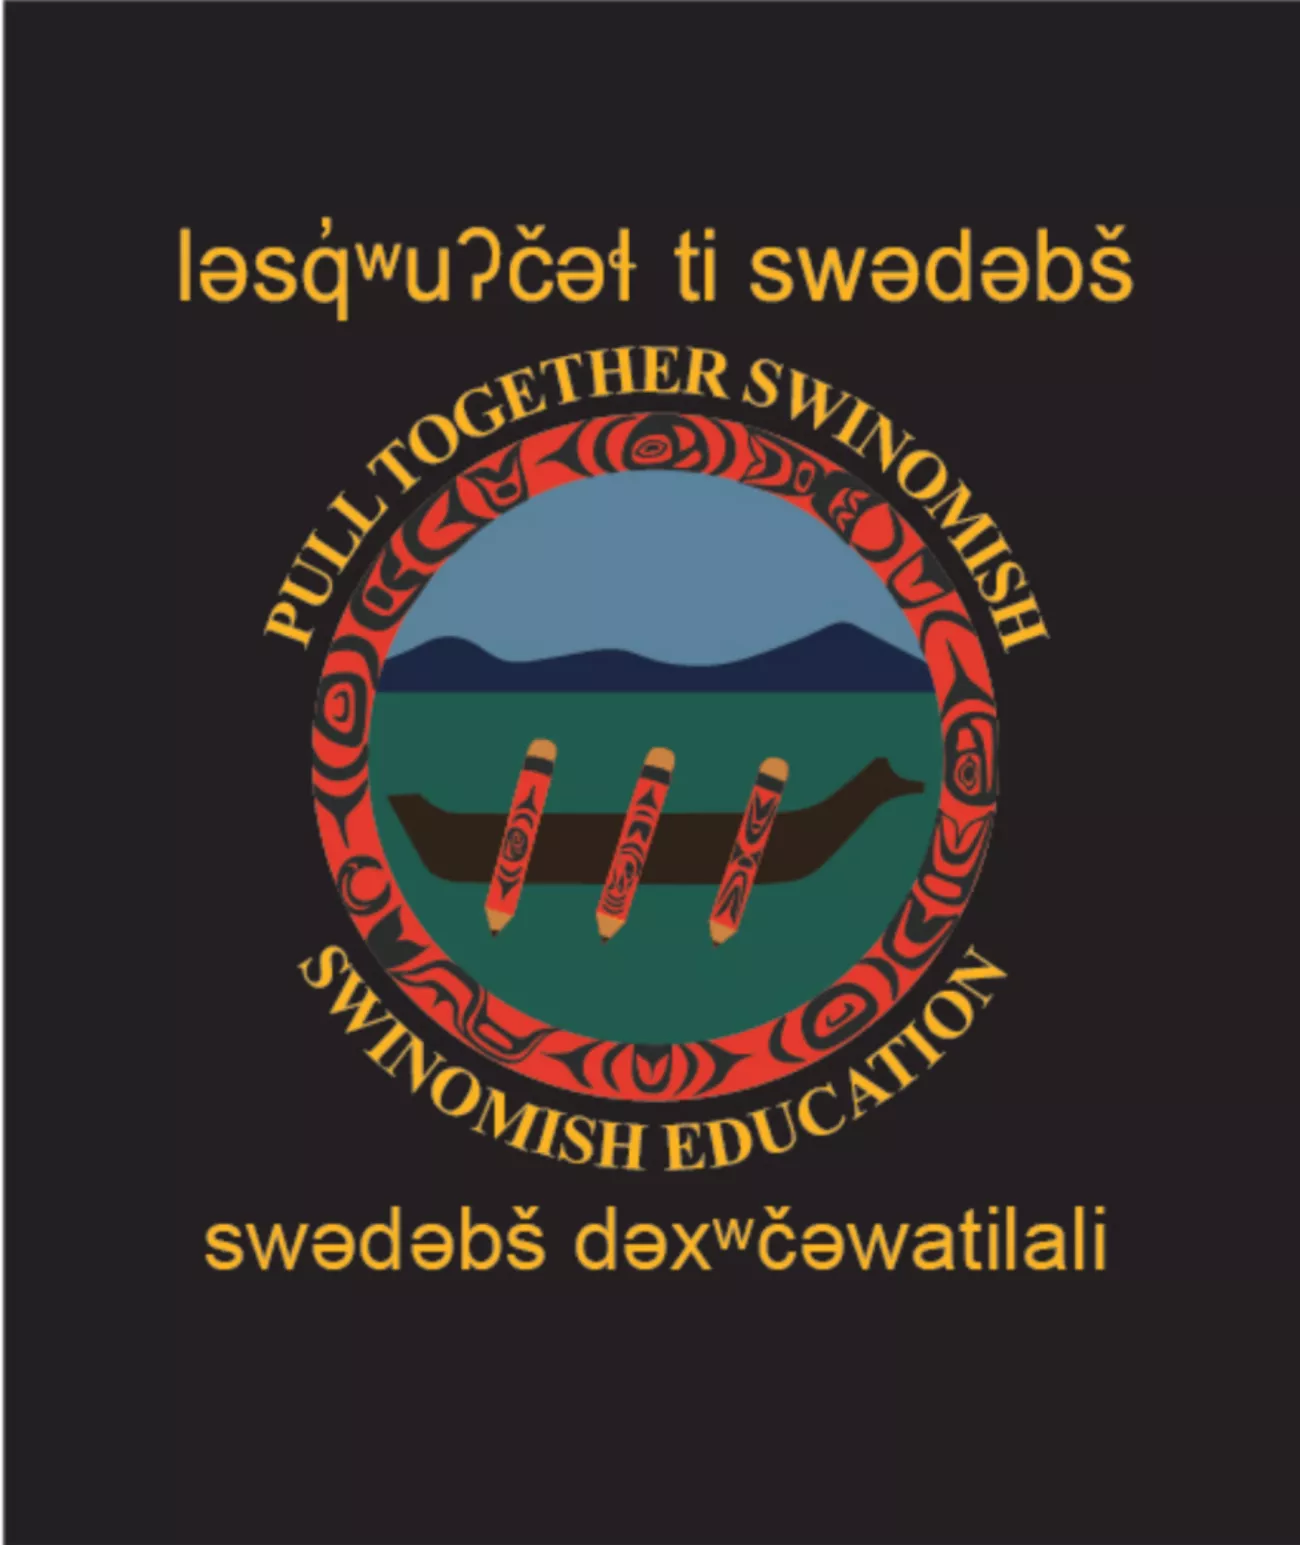 Pull Together Swinomish Education